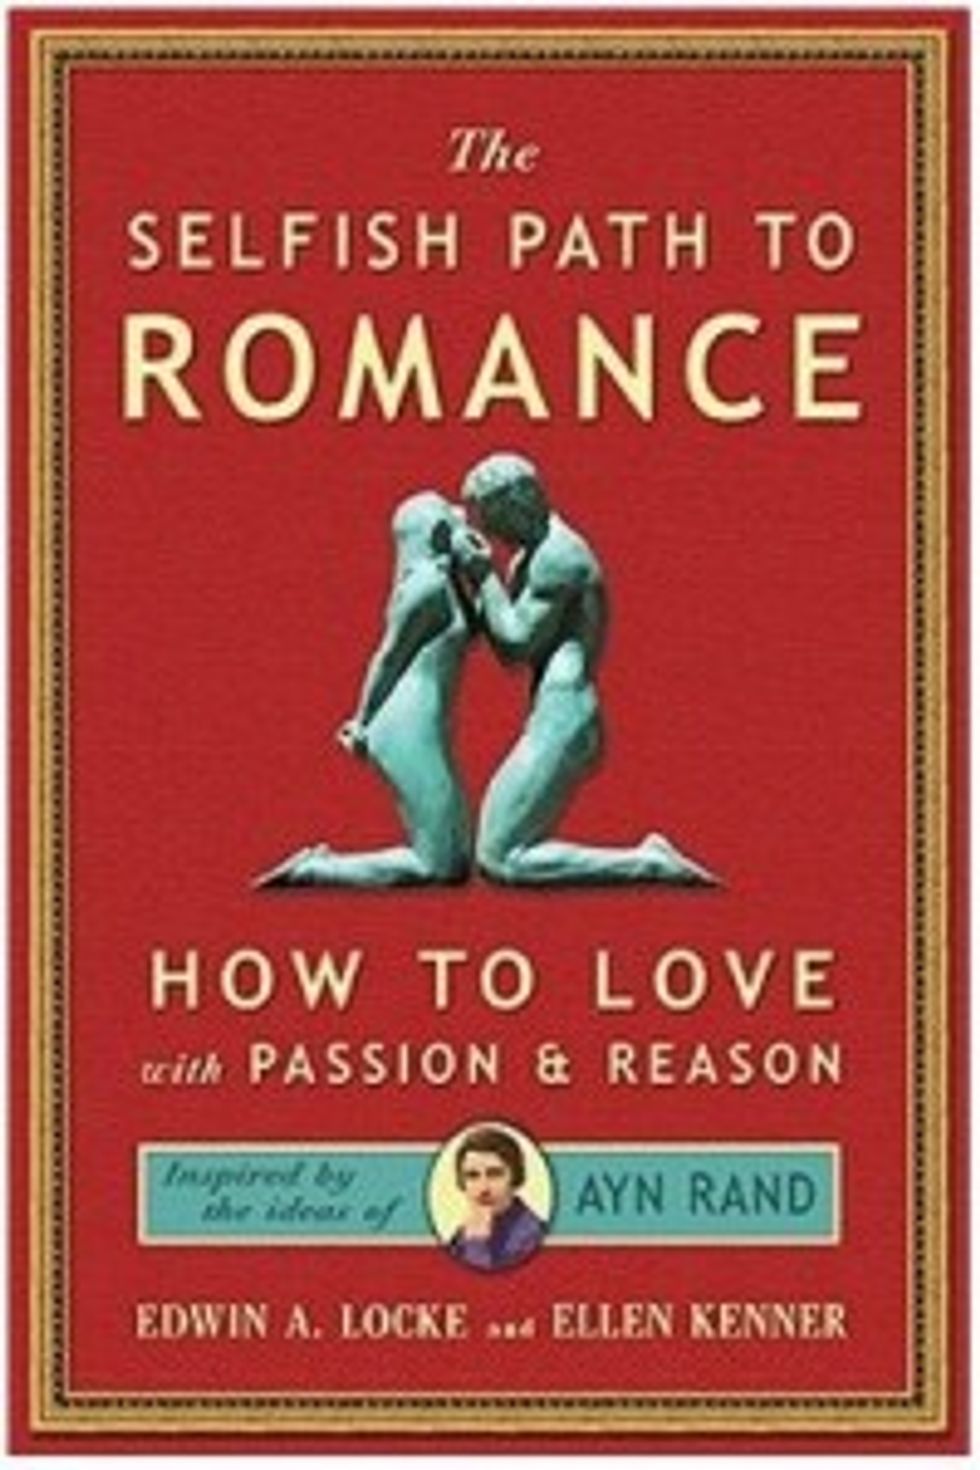 Ayn Rand Dating Site Marginally Less Horrifying Than 'Ayn Rand Dating Site' Might Imply